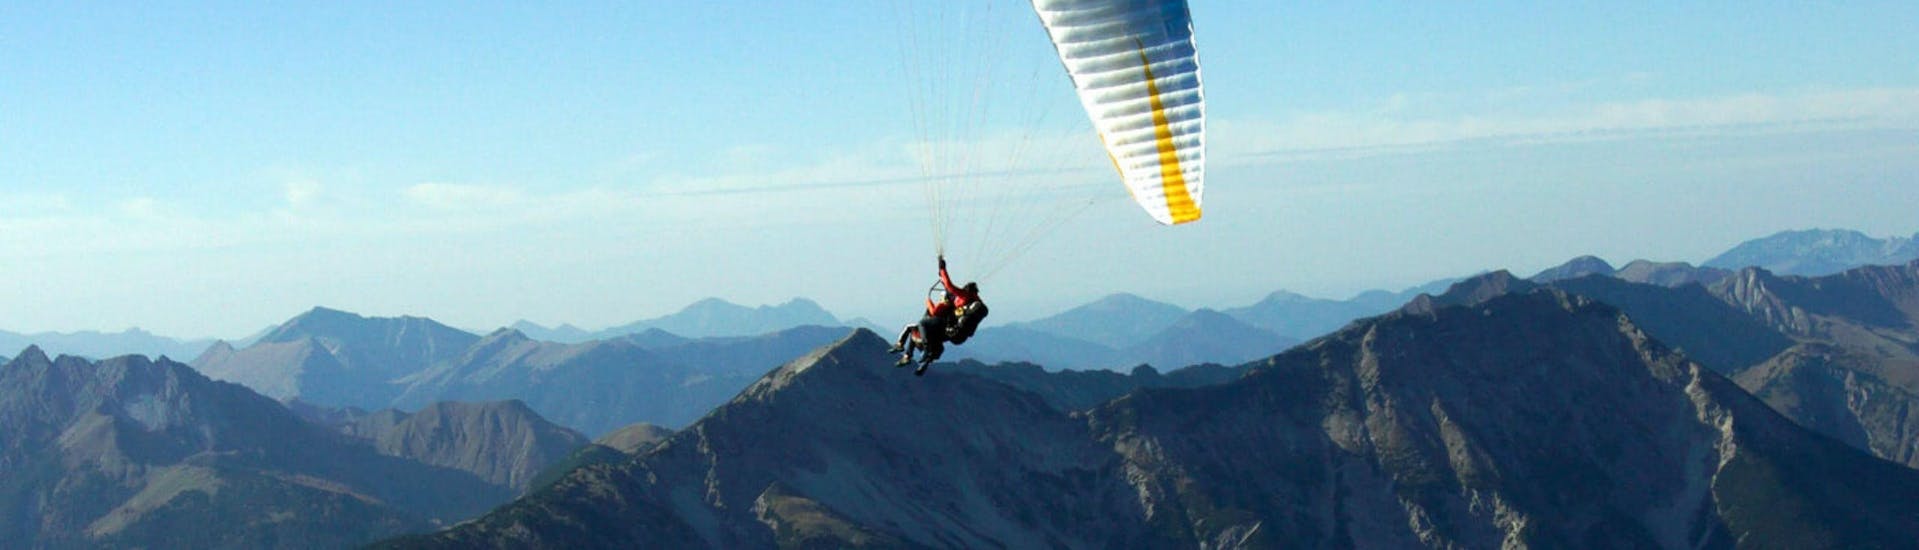 tandem-paragliding-panorama-tandem-achensee-hero